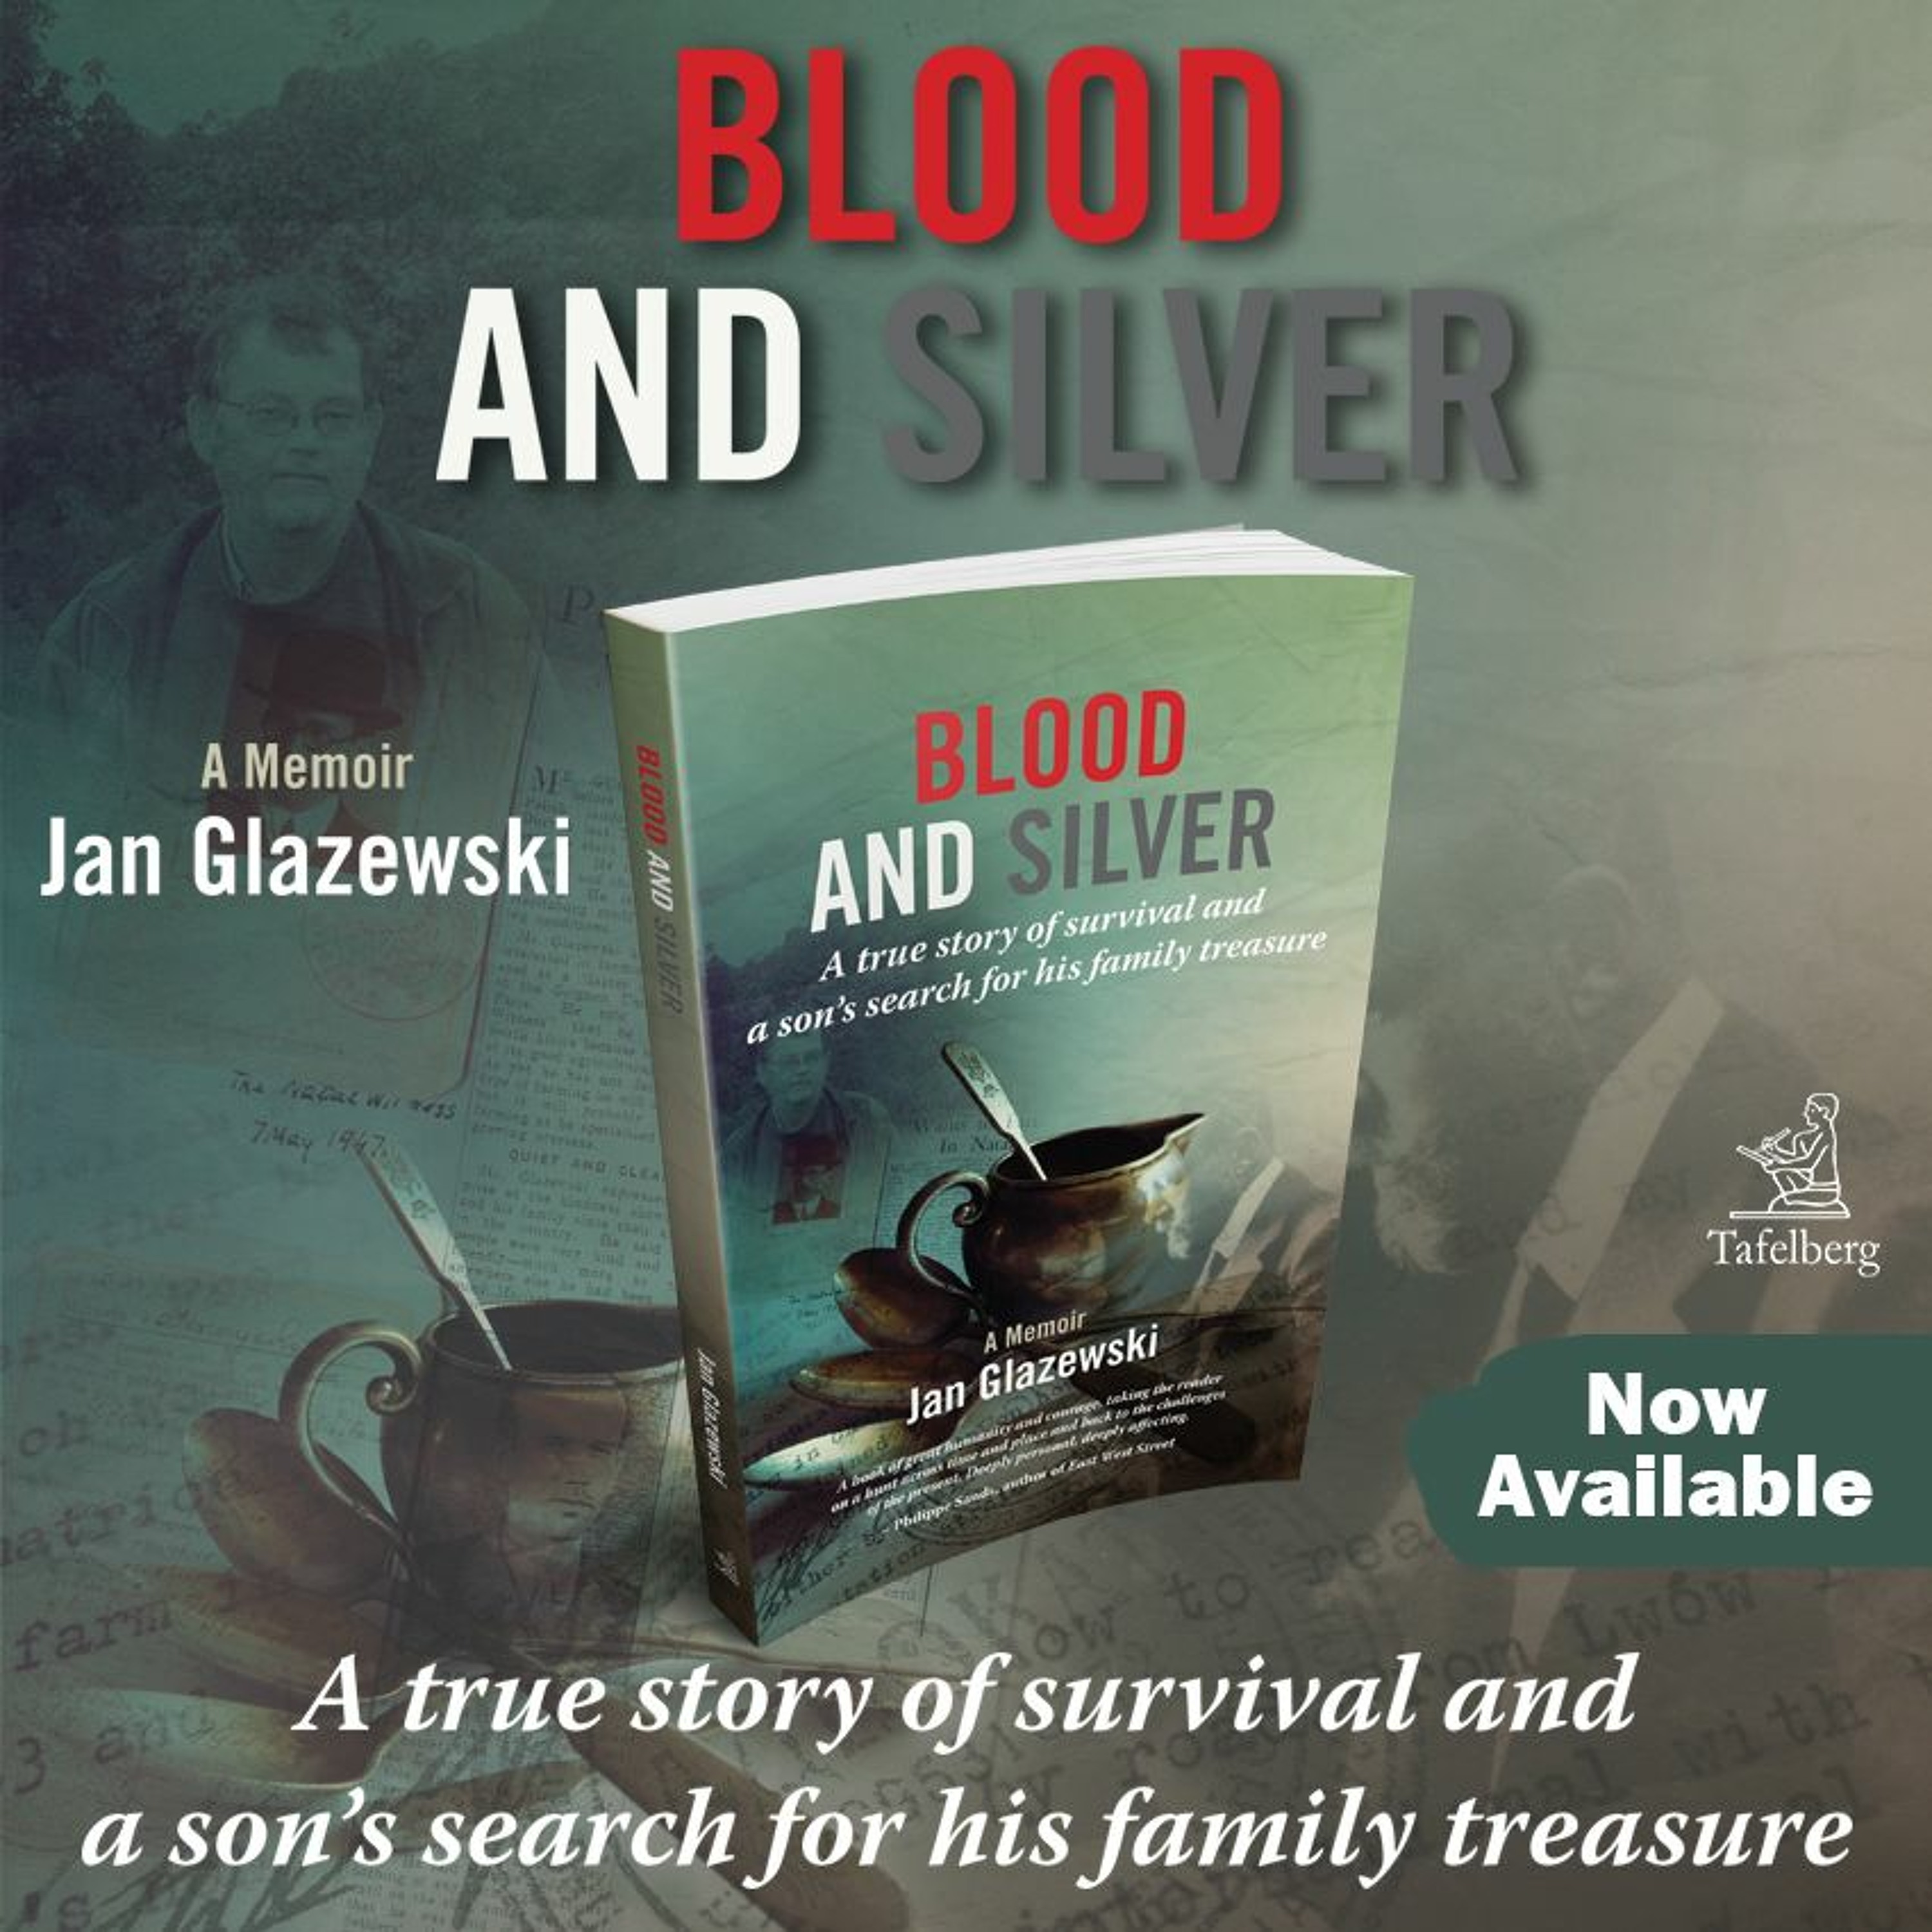 Tafelberg Book Chat: Blood and Silver by Jan Glazewski